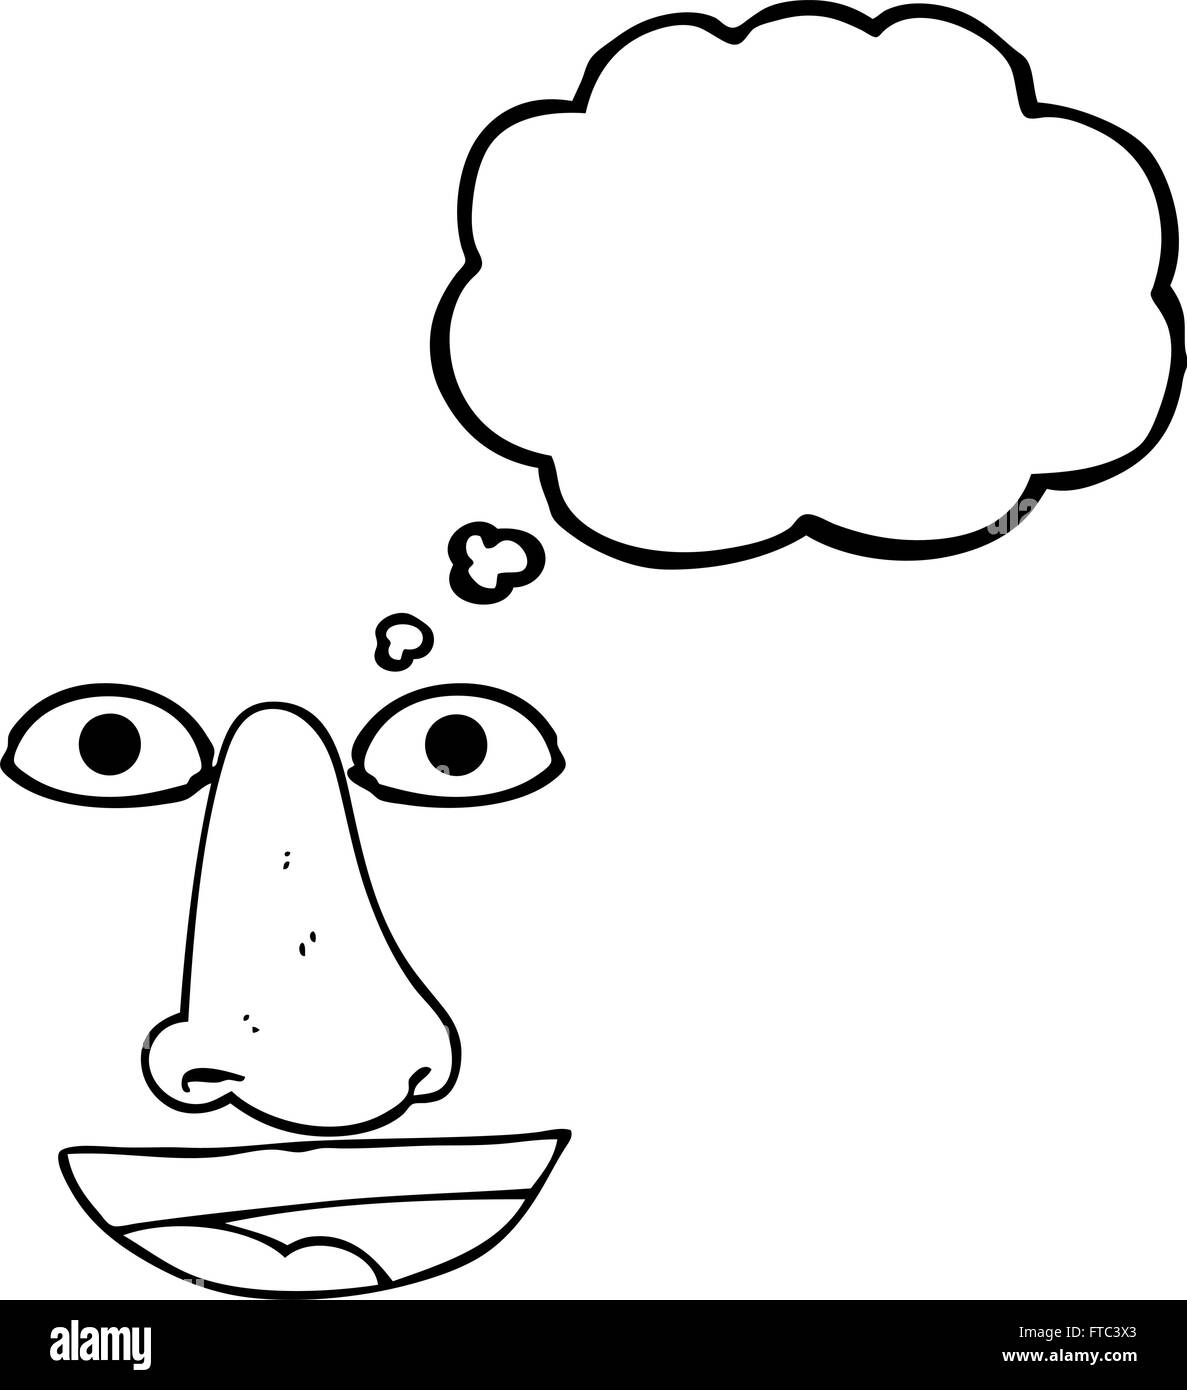 Burbuja de pensamiento dibujados a mano alzada características faciales de  dibujos animados Imagen Vector de stock - Alamy